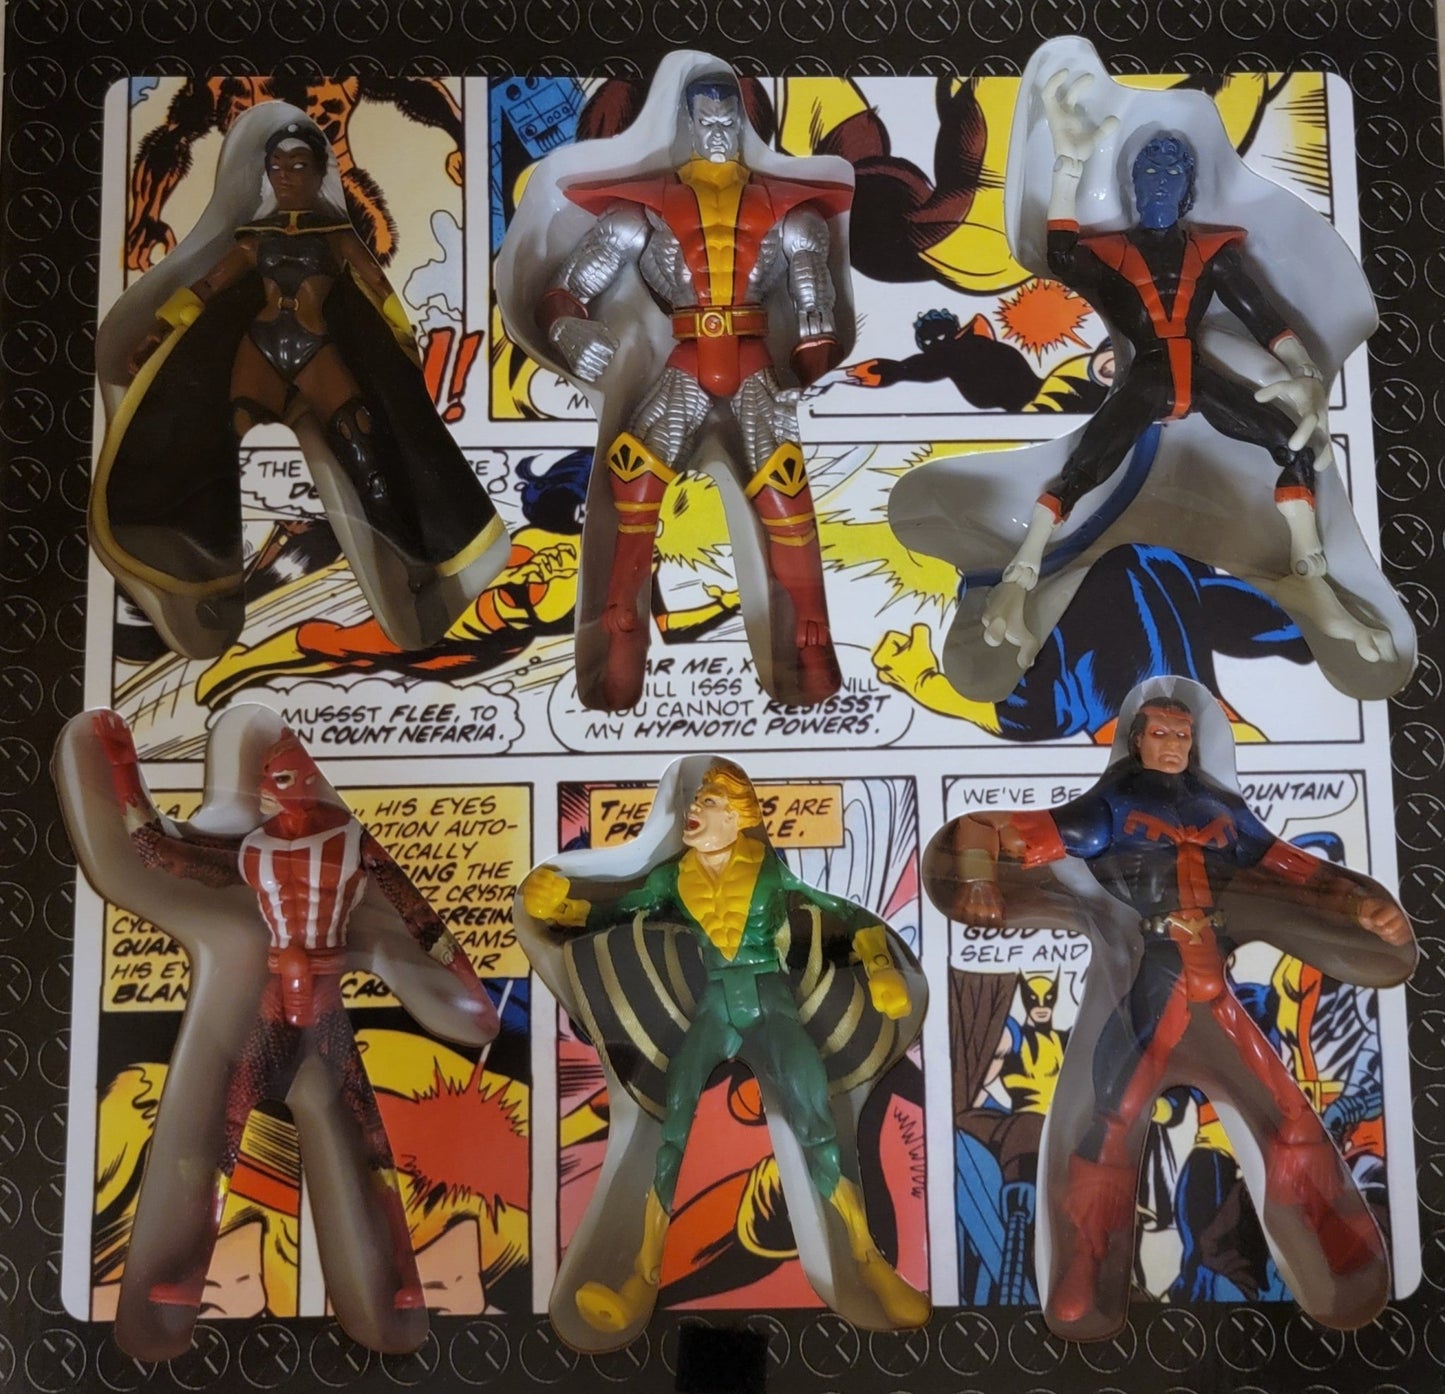 Toy Biz - Toy Biz | Marvel Collector Eidtion Giant Size Z-Men 6 Pack Storm, Colossus, Nightcrawler, Sunfire, Banshee, & Thunderbird | Vintage Action Figure - Action Figures - Steady Bunny Shop